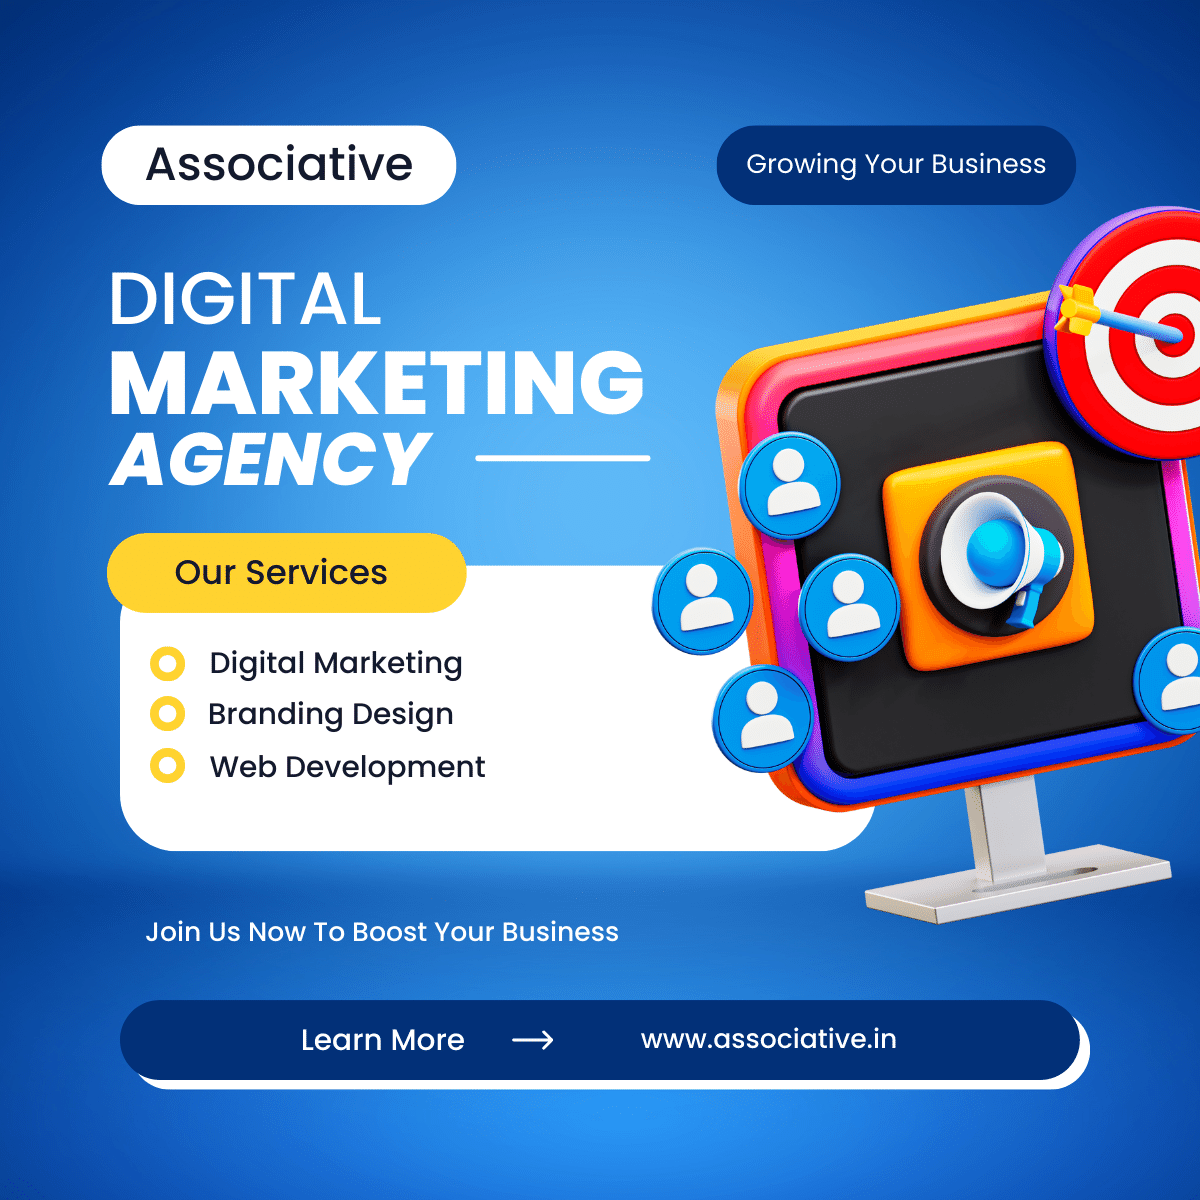 Forget Jugaad, Go Digital! Grow Your Business with Associative's Digital Marketing Dhamaka!